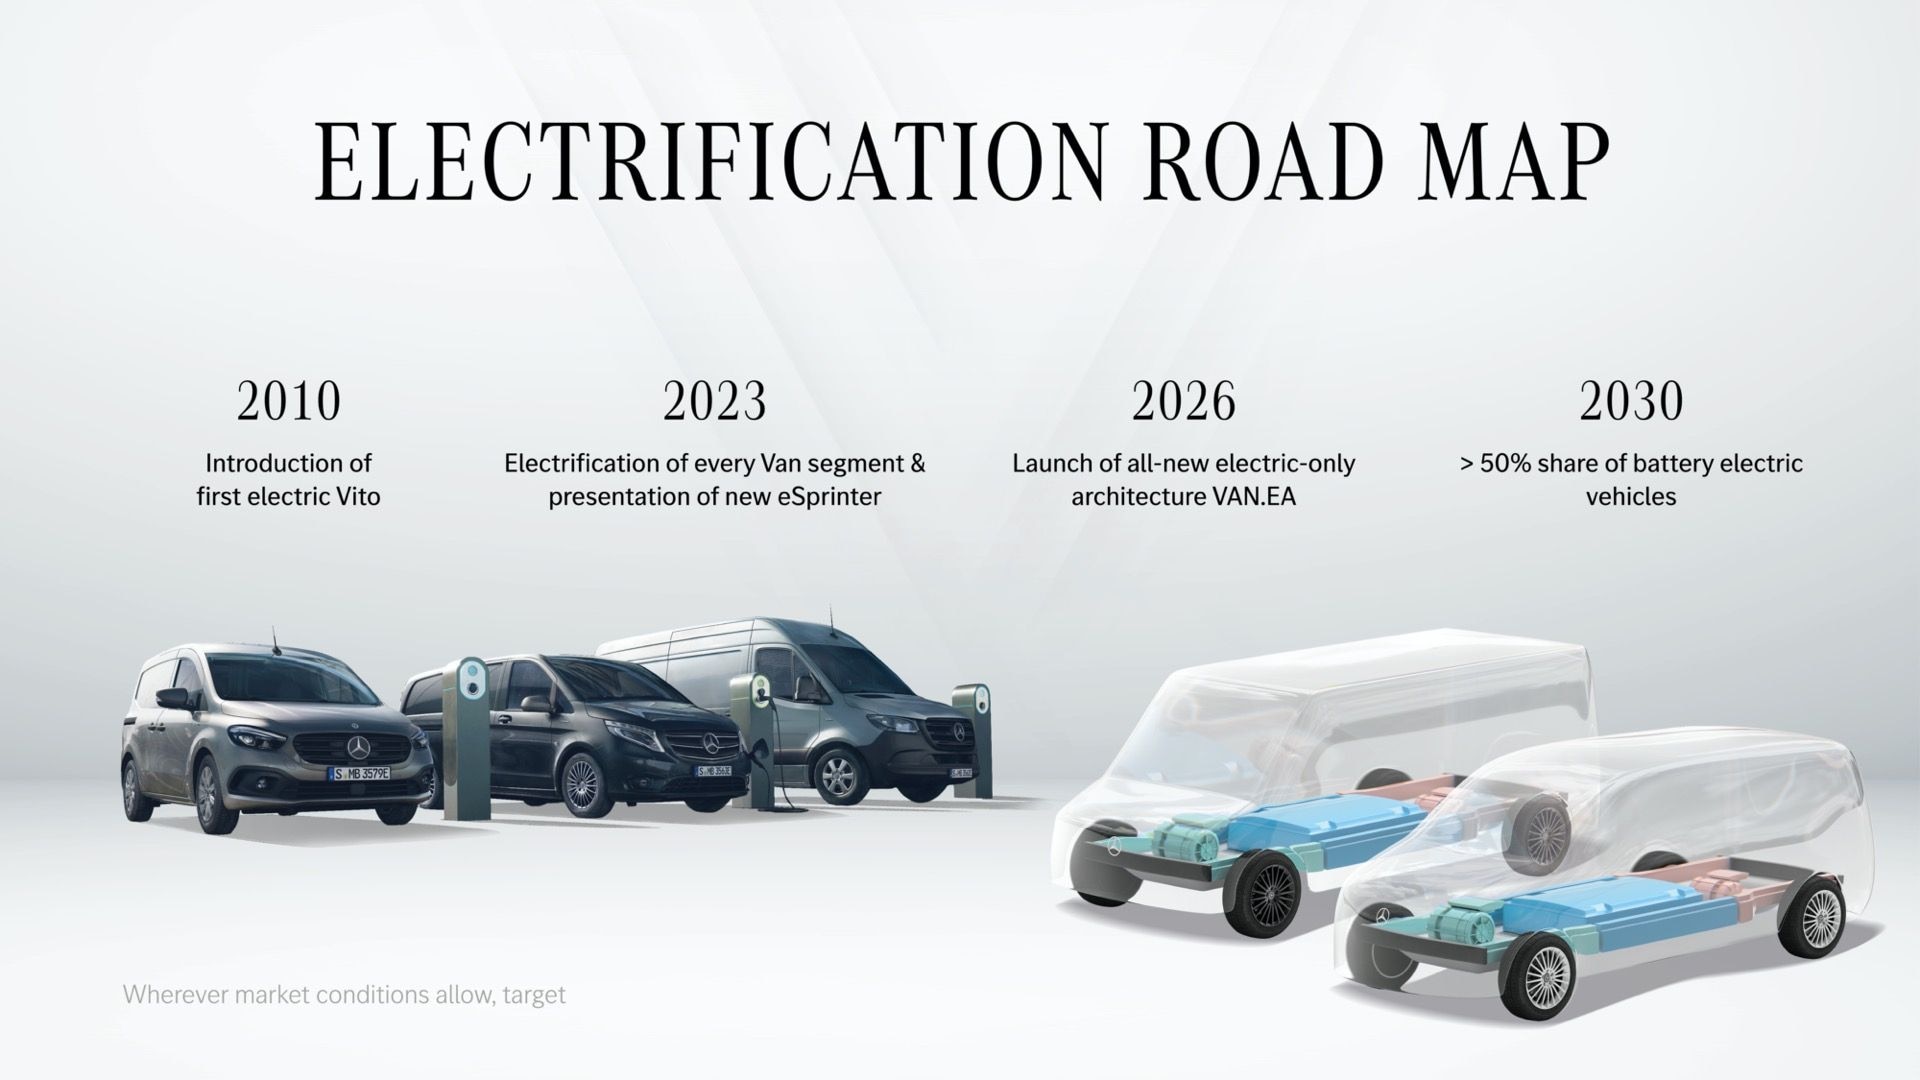 Mercedes electrification roadmap for vans